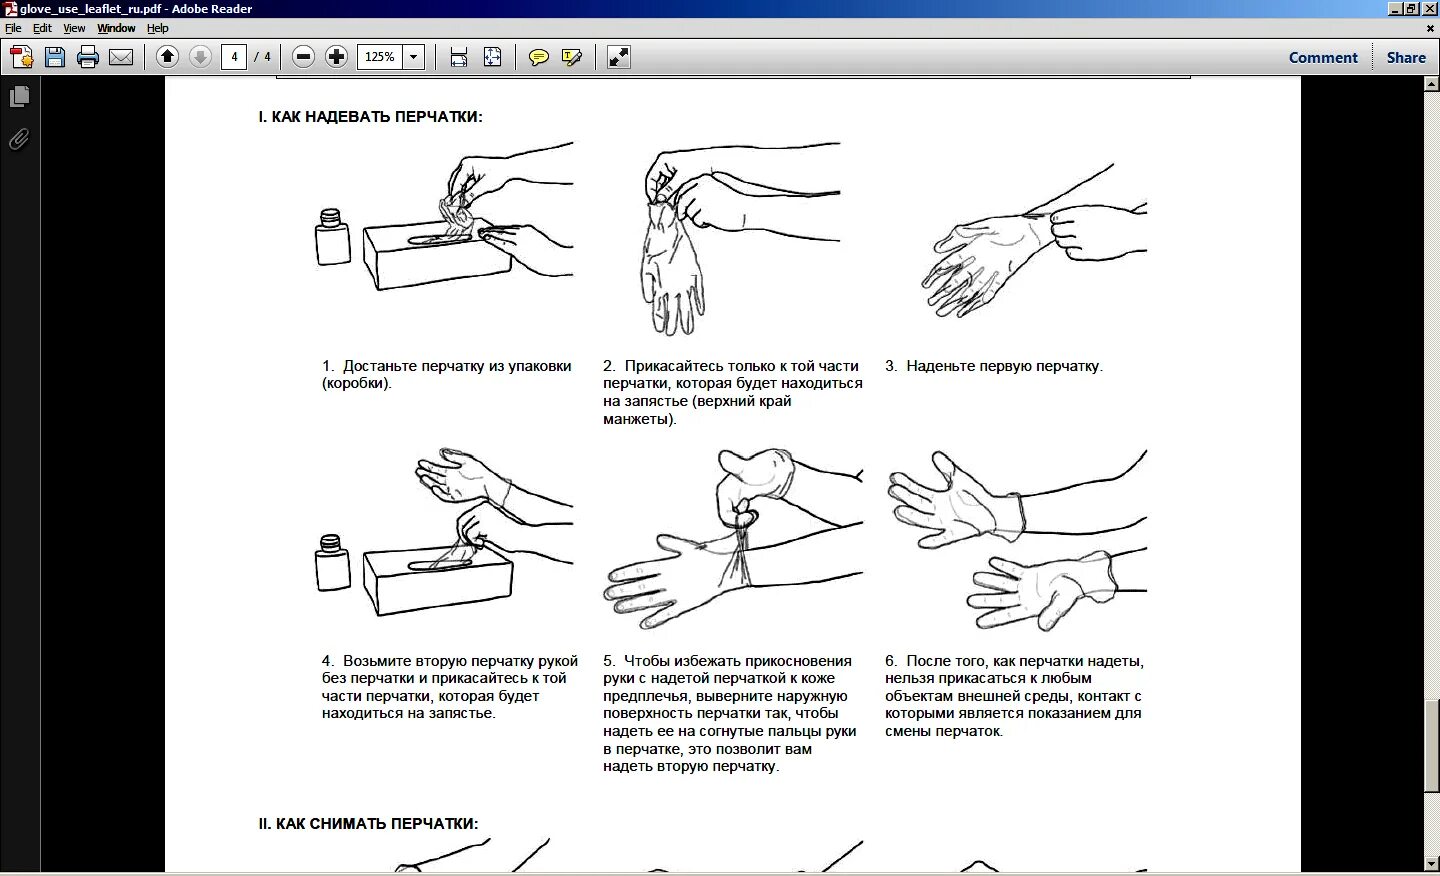 После снятия перчаток. Надевание и снимание стерильных перчаток. Надевание стерильных медицинских перчаток. Одевание стерильных и нестерильных перчаток. Схема надевания стерильных перчаток.